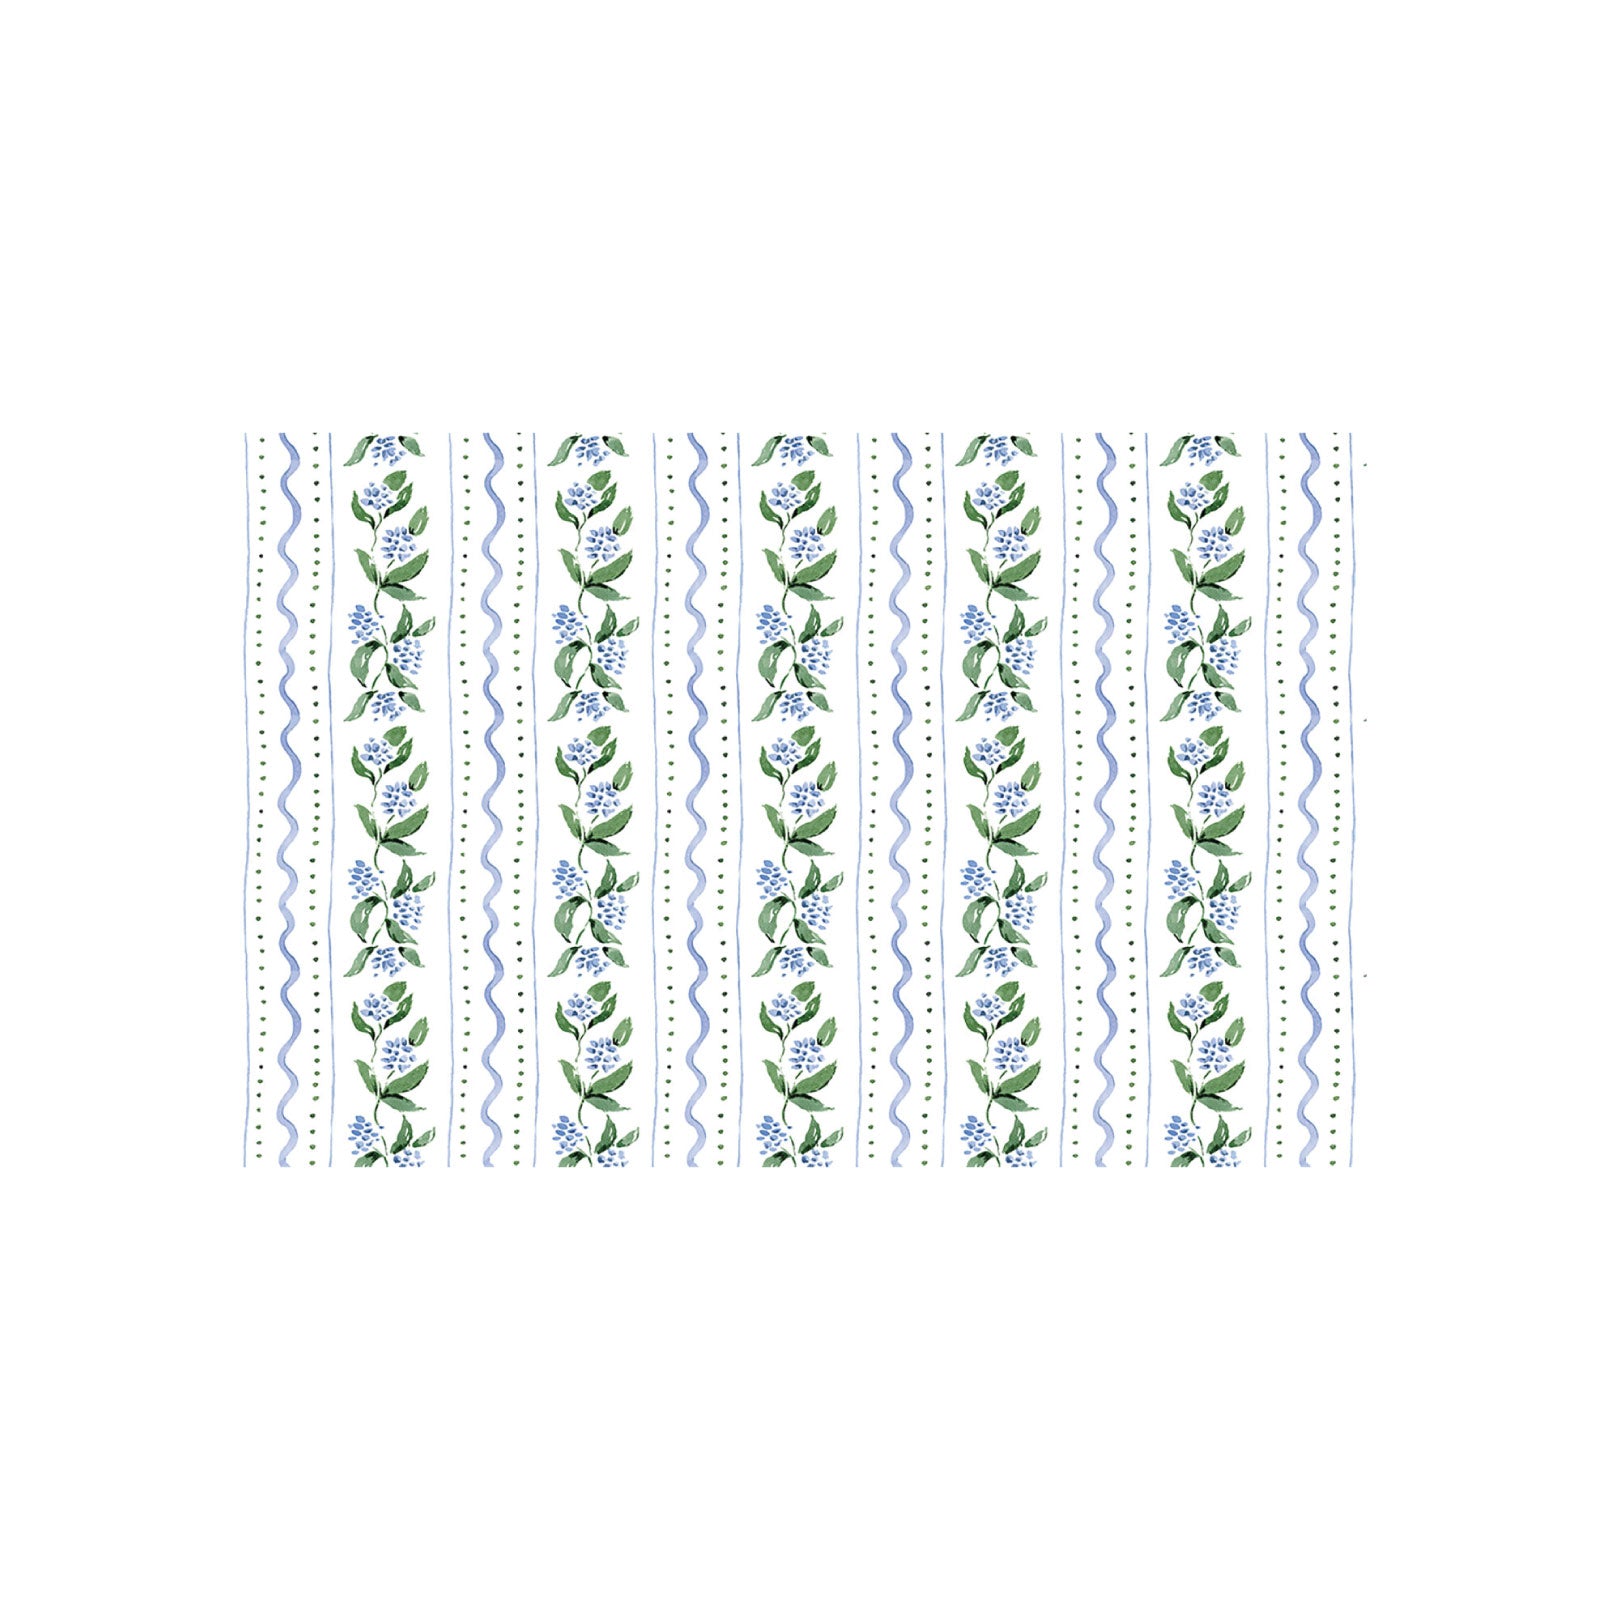 Floral Meadow Paper Placemat